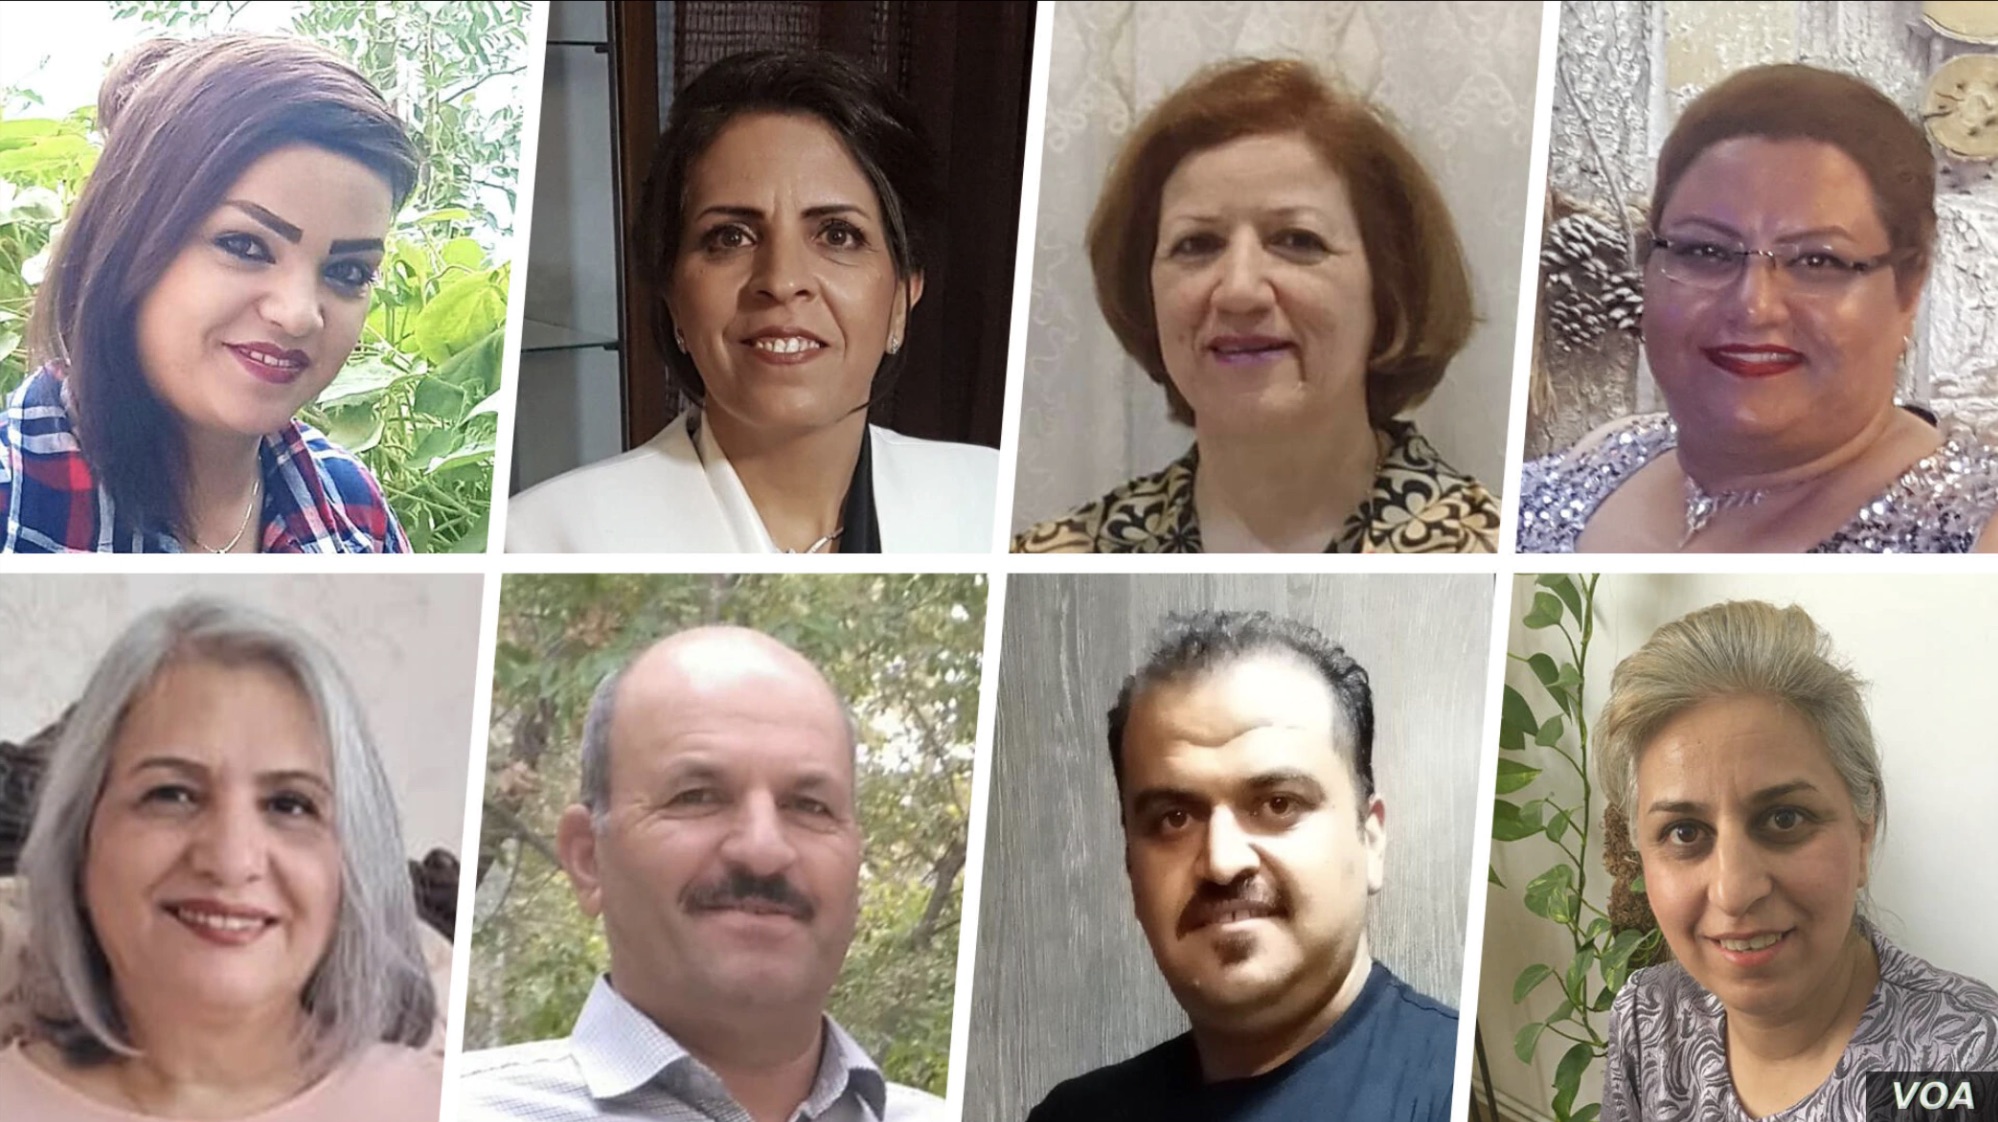 Iranian Baha'is who received a September 28, 2020, summons to prison in Birjand. Top from left: Arezoo Mohammadi, Farzaneh Dimi, Atieh Salehi, Roya Malaki. Bottom from left: Nasrin Ghadiri, Ataollah Malaki, Saeed Malaki, Banafsheh Mokhtari. (VOA Persian)